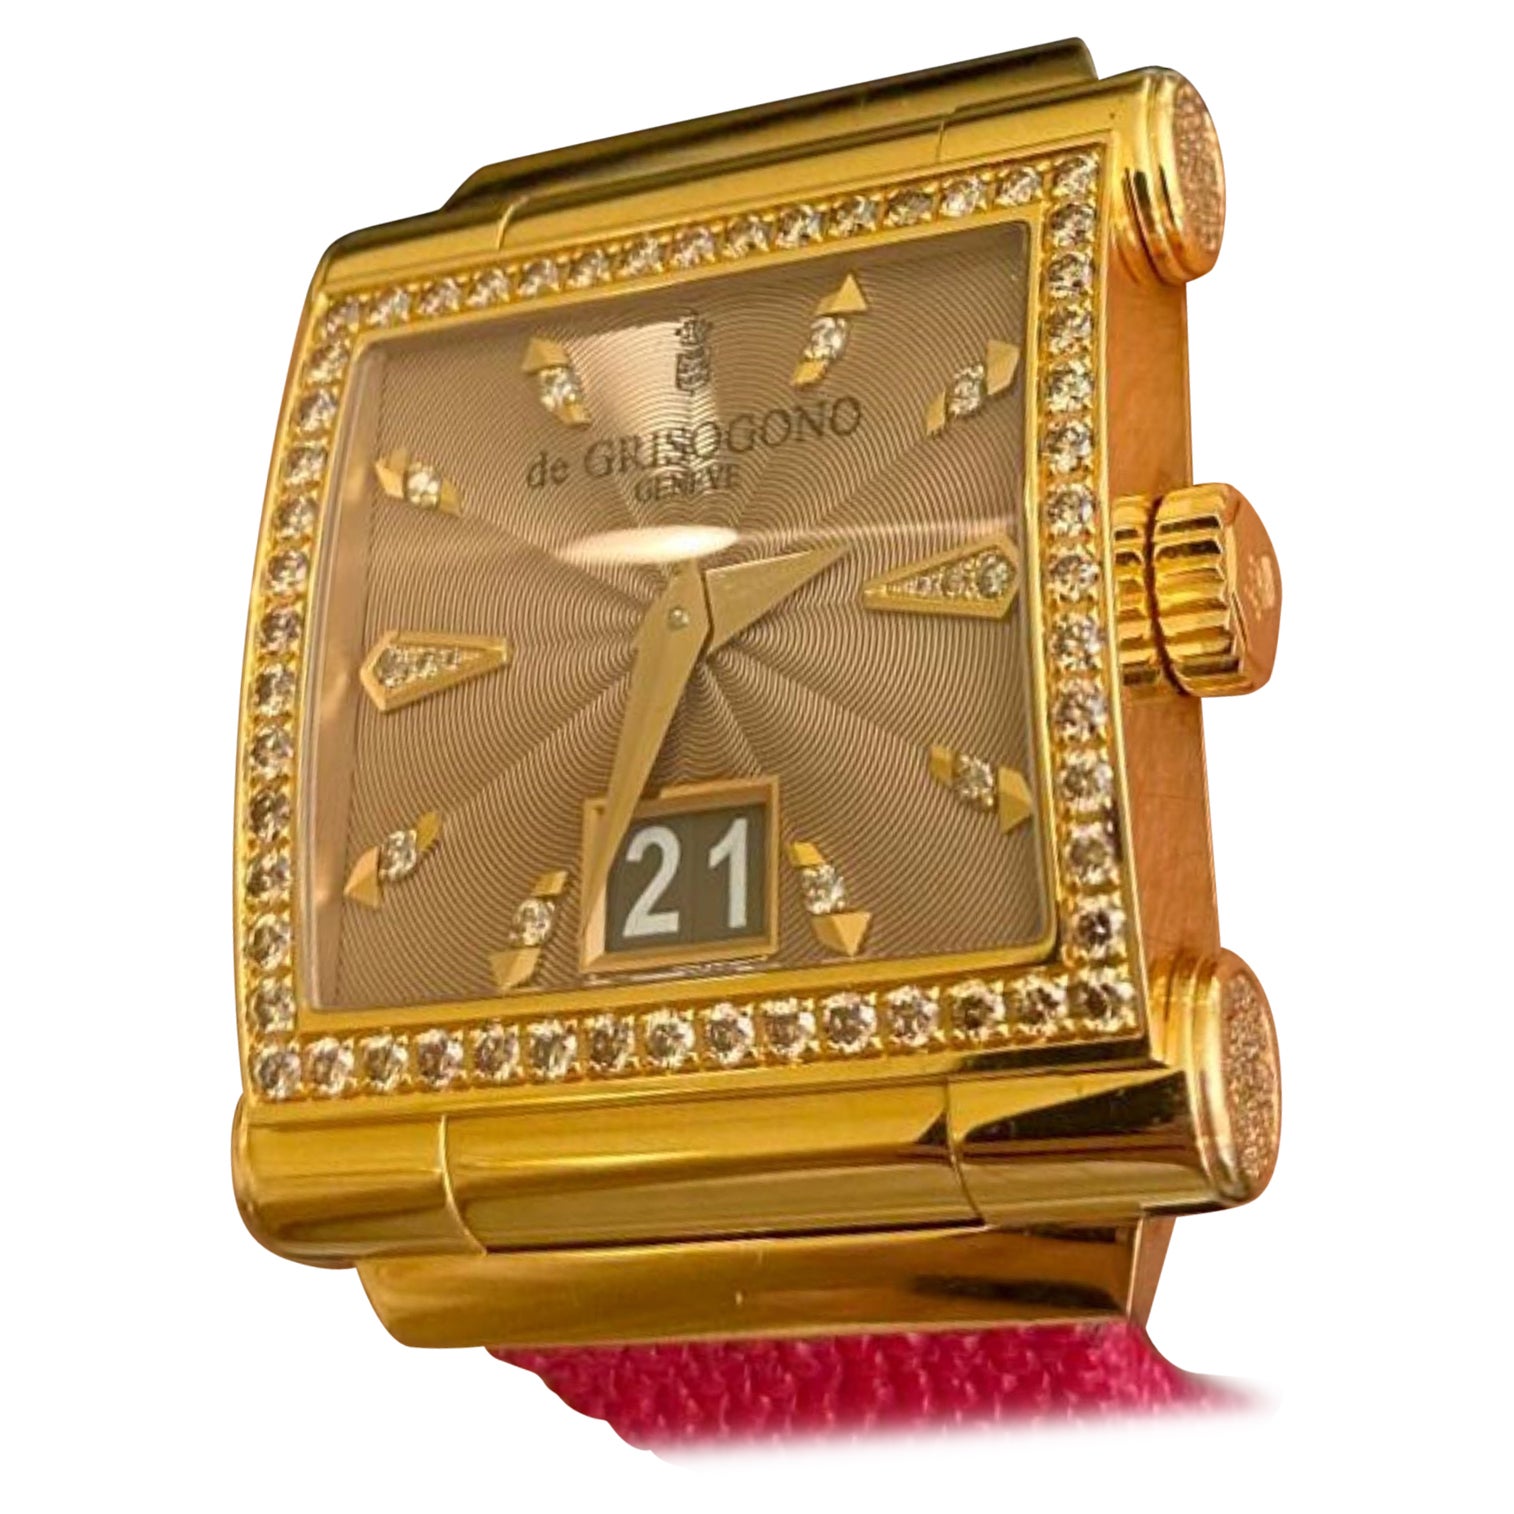 De Grisogono Grande S1218ct Rose Gold 3.22ct Diamond Watch Pink Galuchat Strap